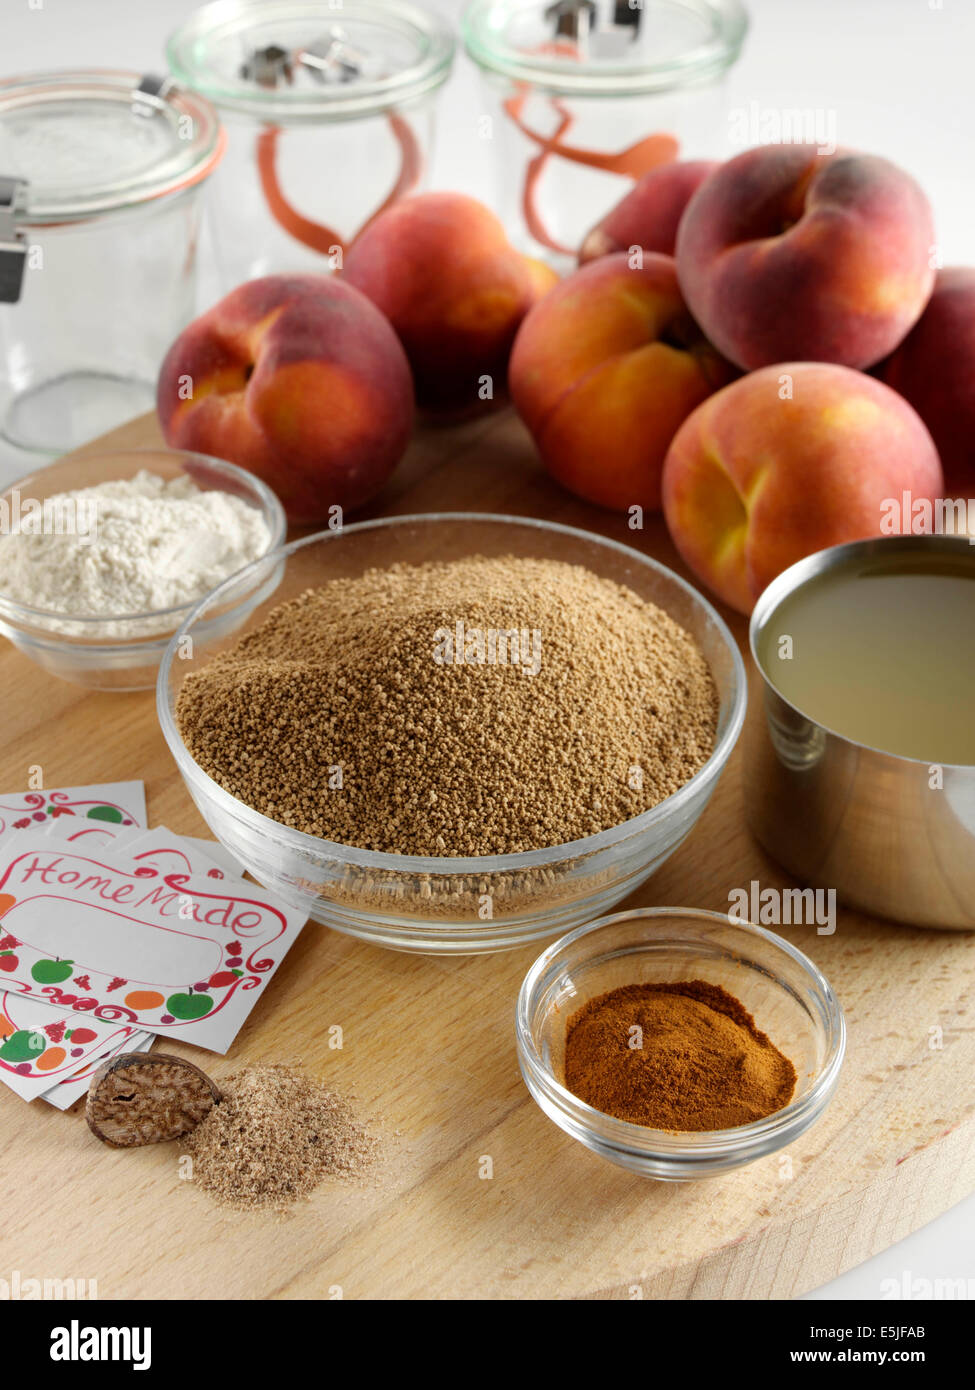 Spiced peach jam ingredients Stock Photo